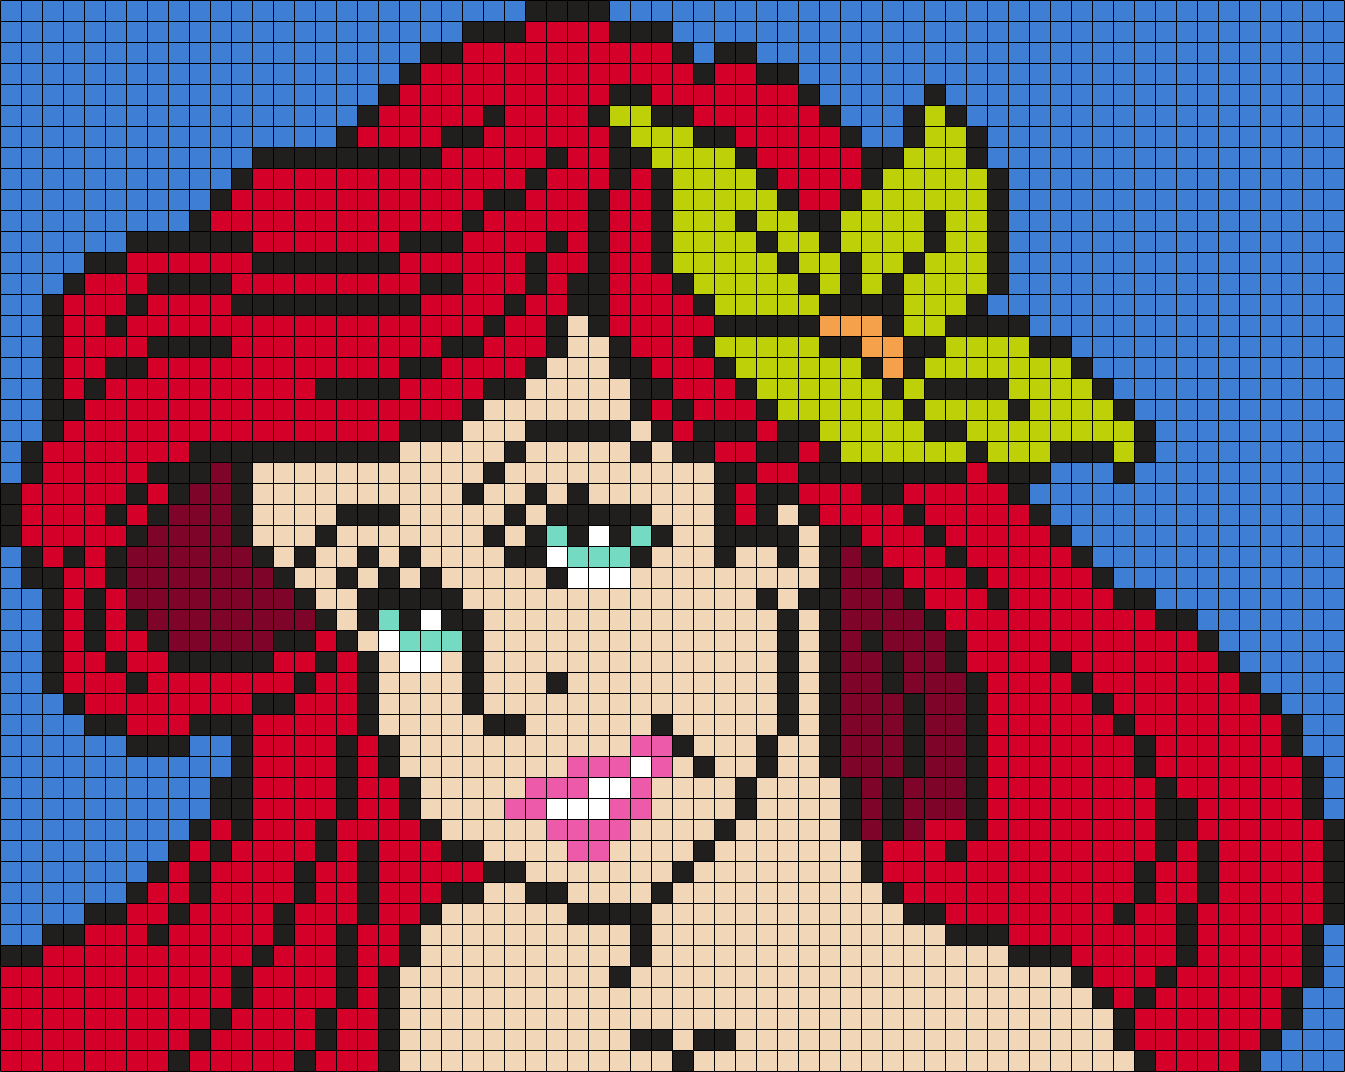 Ariel The Little Mermaid (Square)